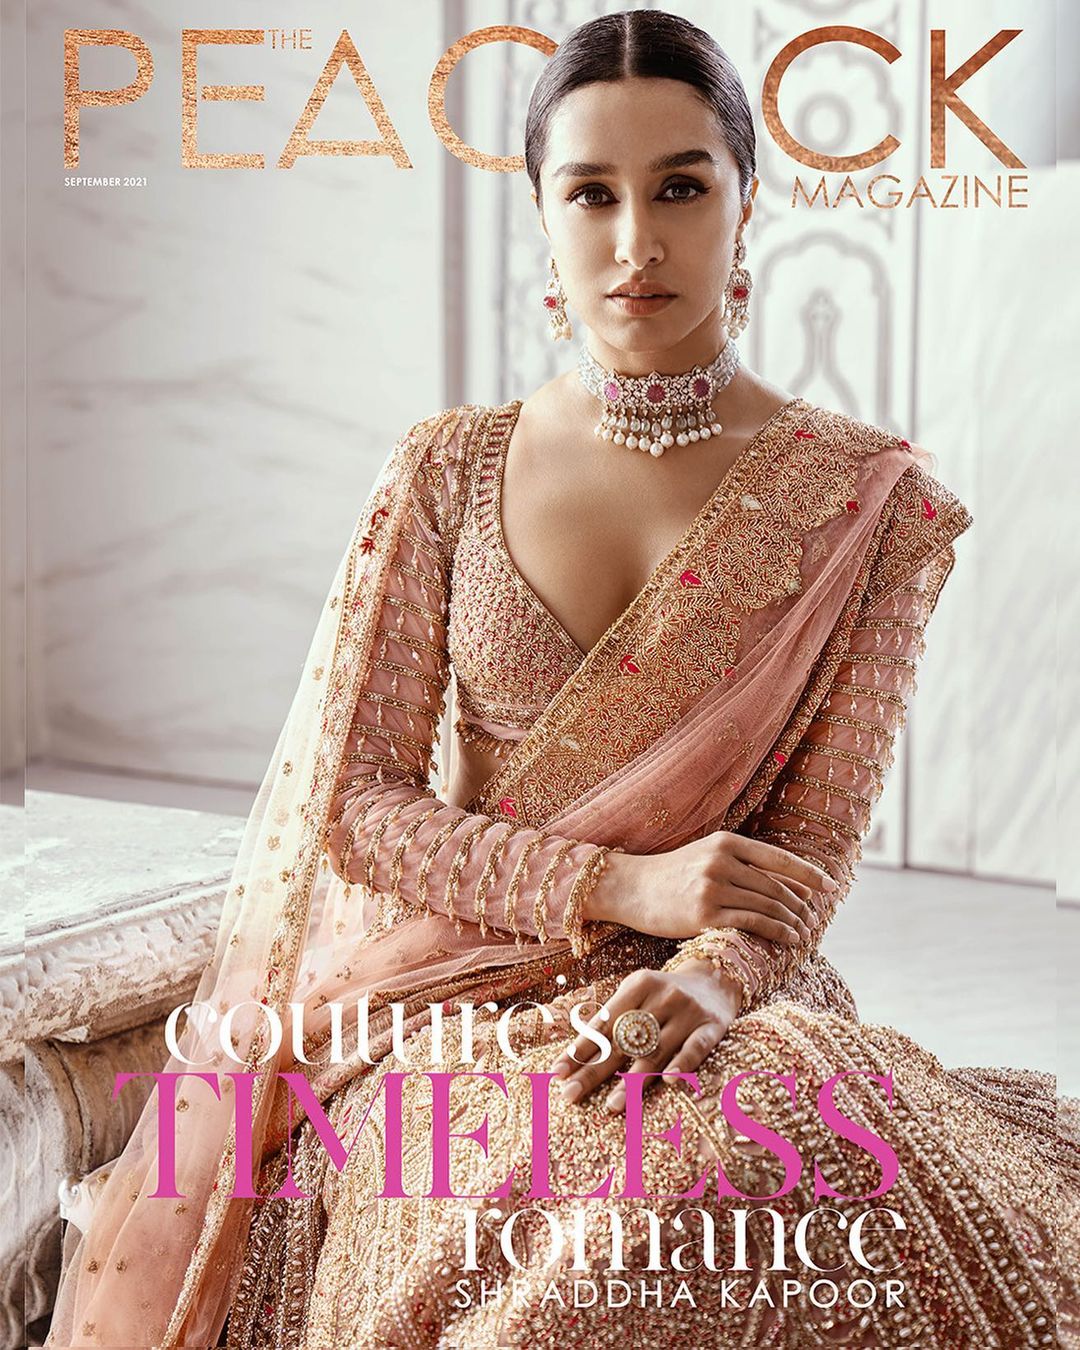 Shraddha Kapoor stuns as cover star of a fashion magazine. 